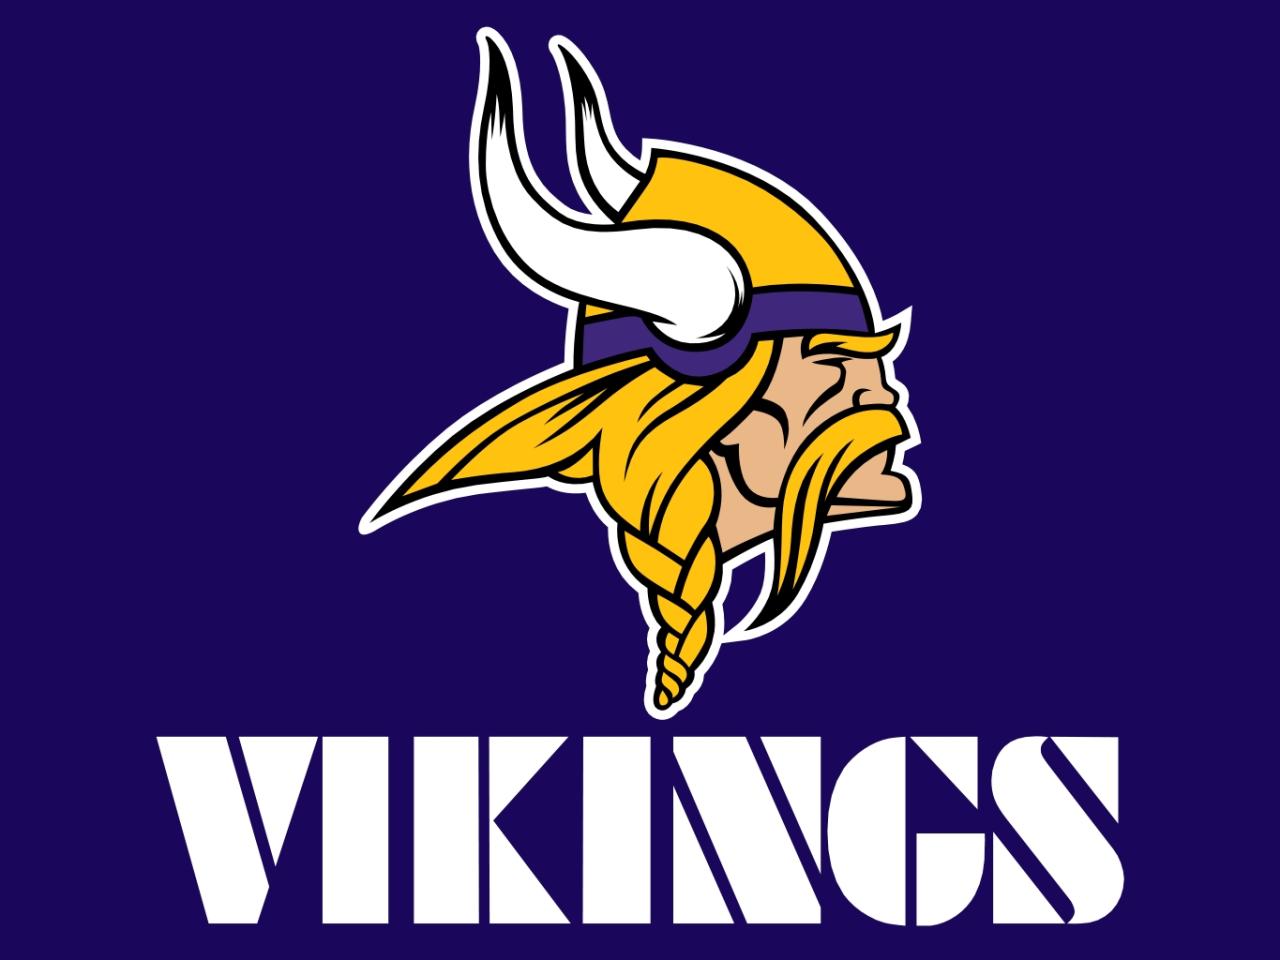 Minnesota Vikings: A Legacy of Gridiron Glory and Community Pride